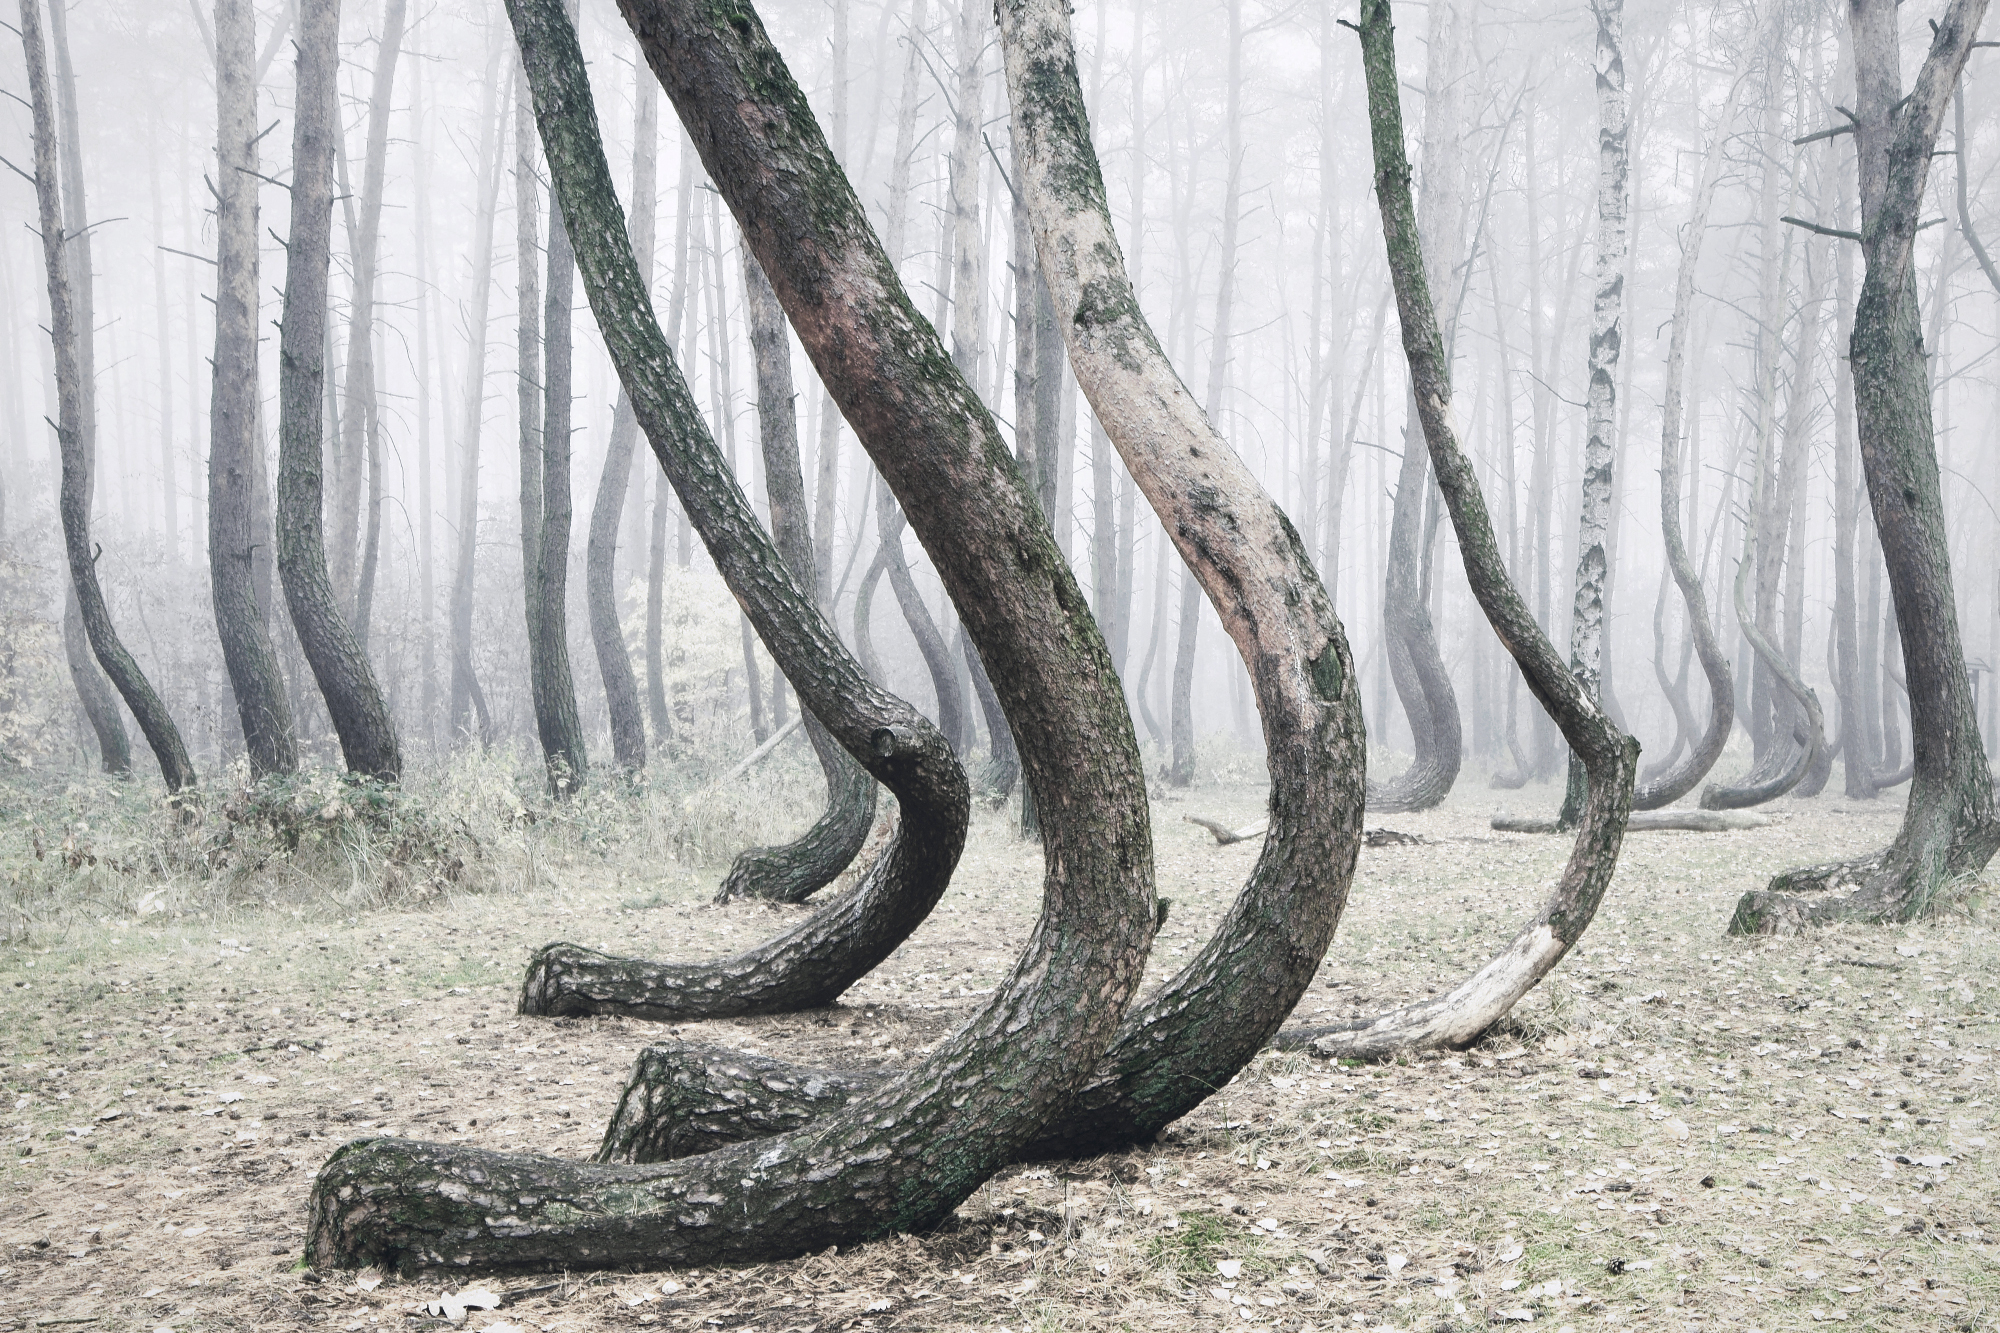 Пляшущий лес. Кривой лес (Crooked Forest) Польша. Куршская коса Танцующий лес. Криволесье Куршская коса. Танцующий лес на Куршской косе.